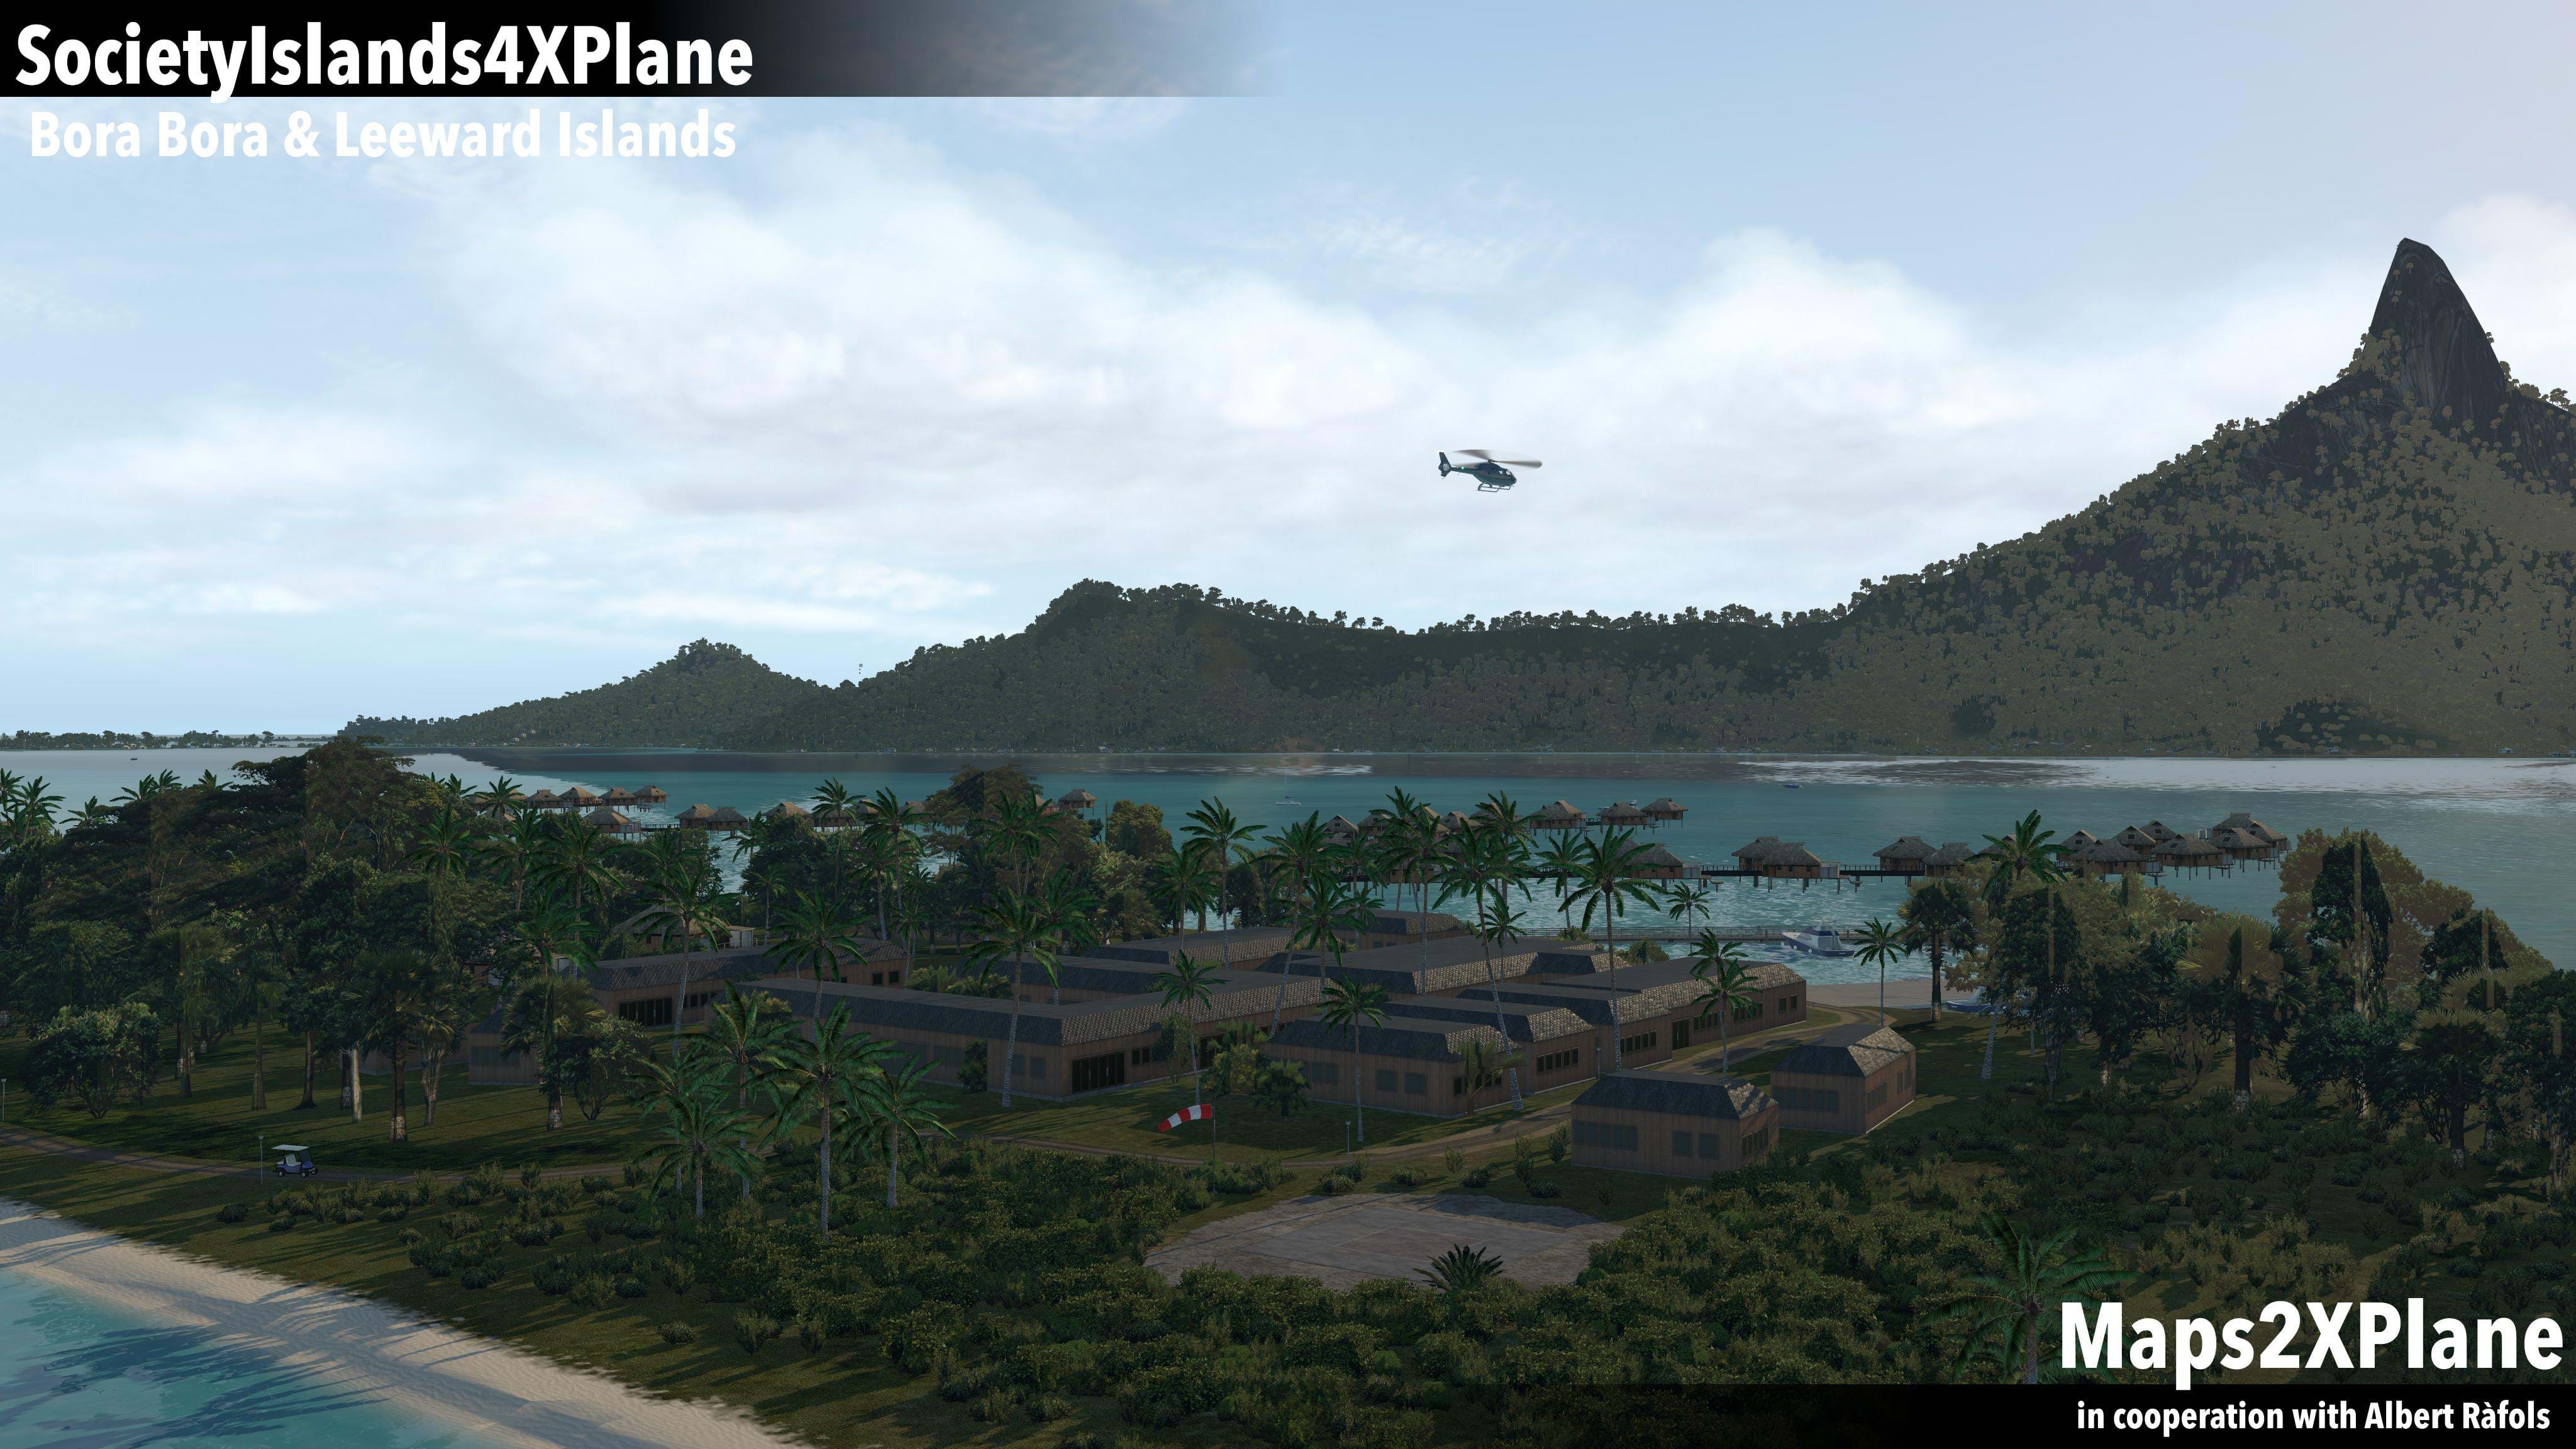 Maps2XPlane’s Society Islands XP - Bora Bora & Leeward Islands for X-Plane